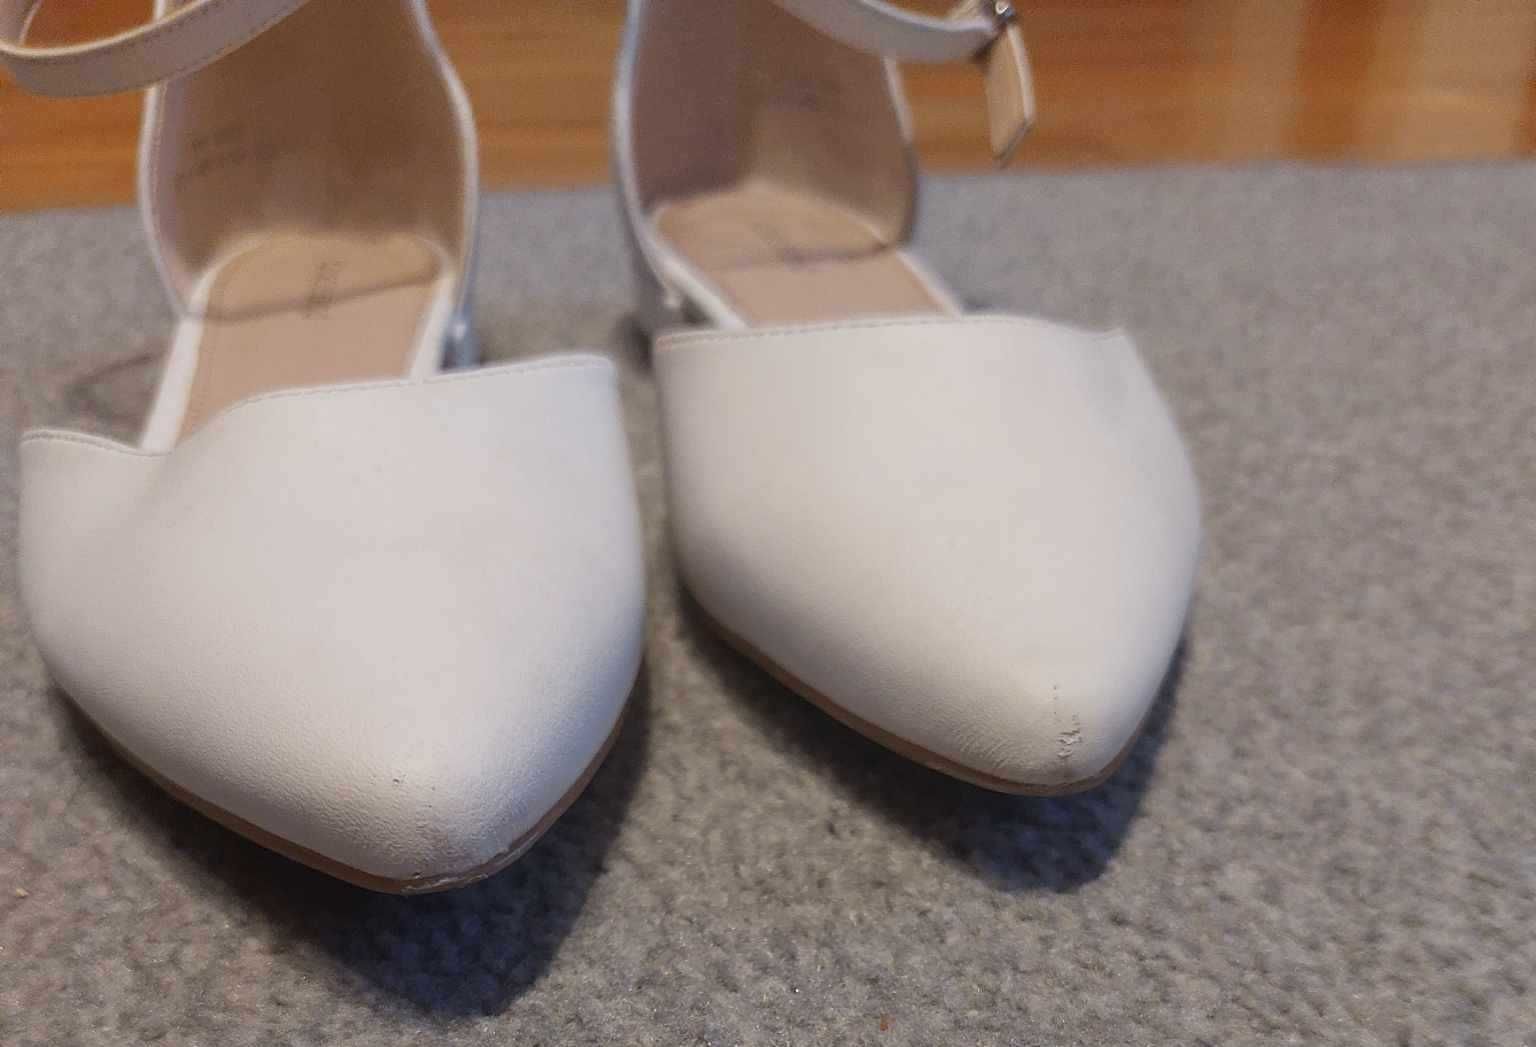 Baleriny /buty białe